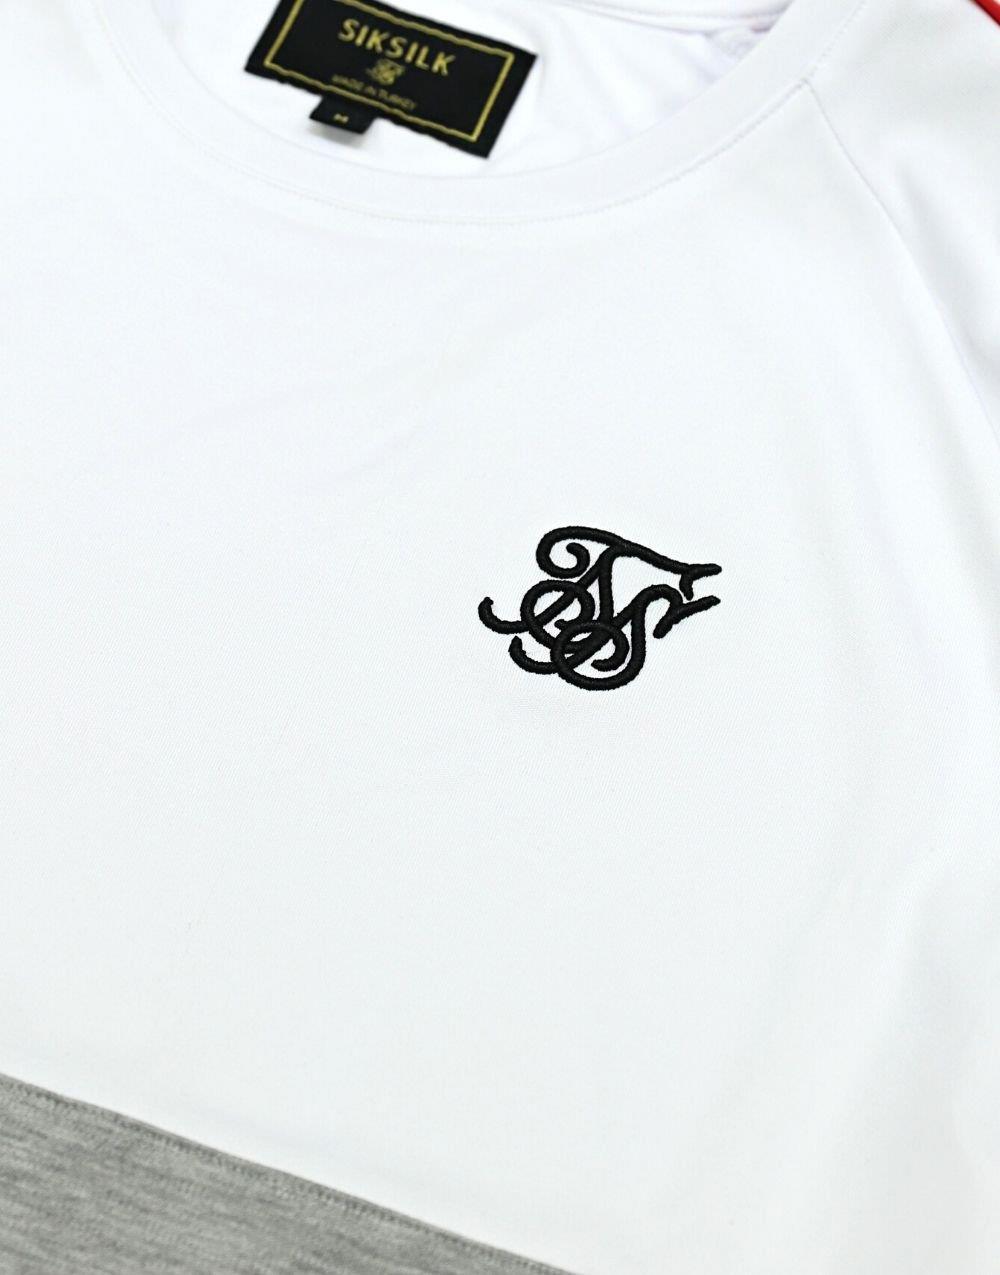 SikSilk Reglan Tee Men's T-Shirt White Gray - STREET MODE ™